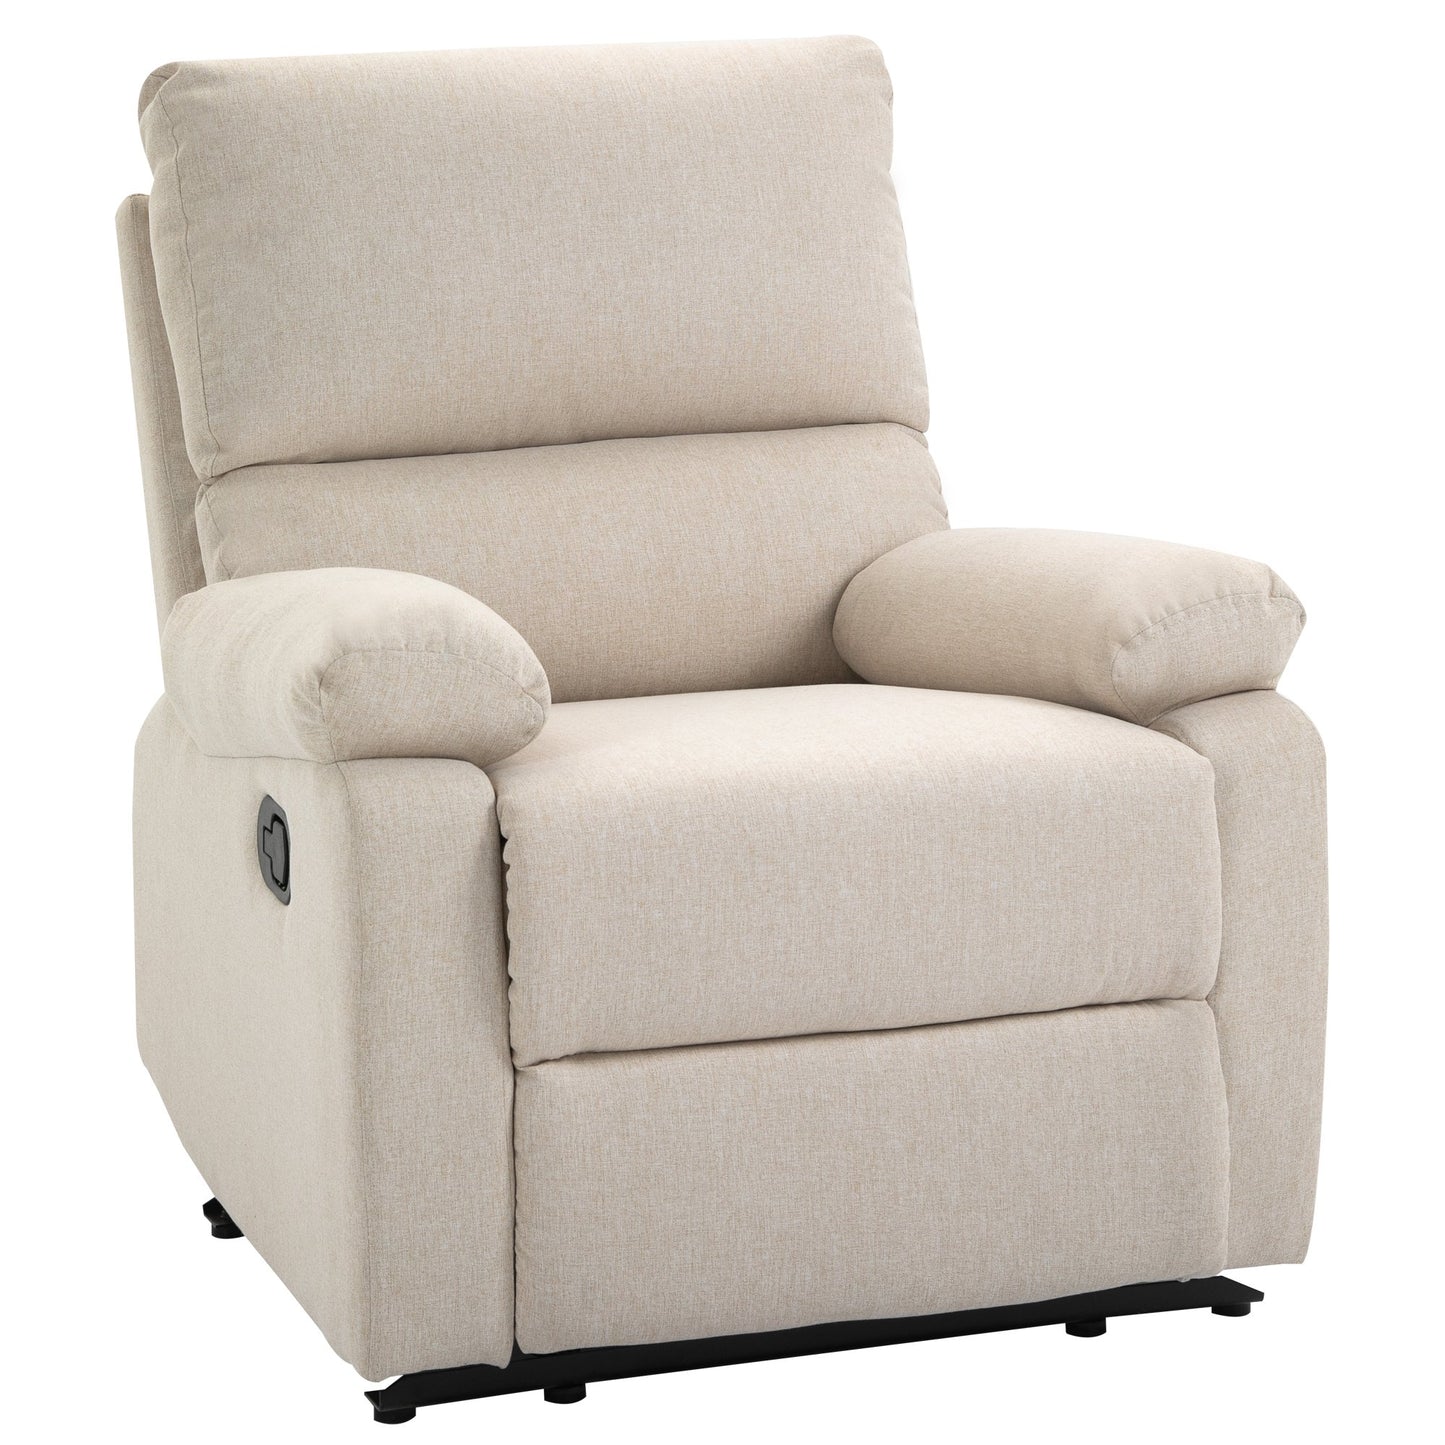 HOMCOM Single Sofa Chair Manual Adjustable Reclining Armchair